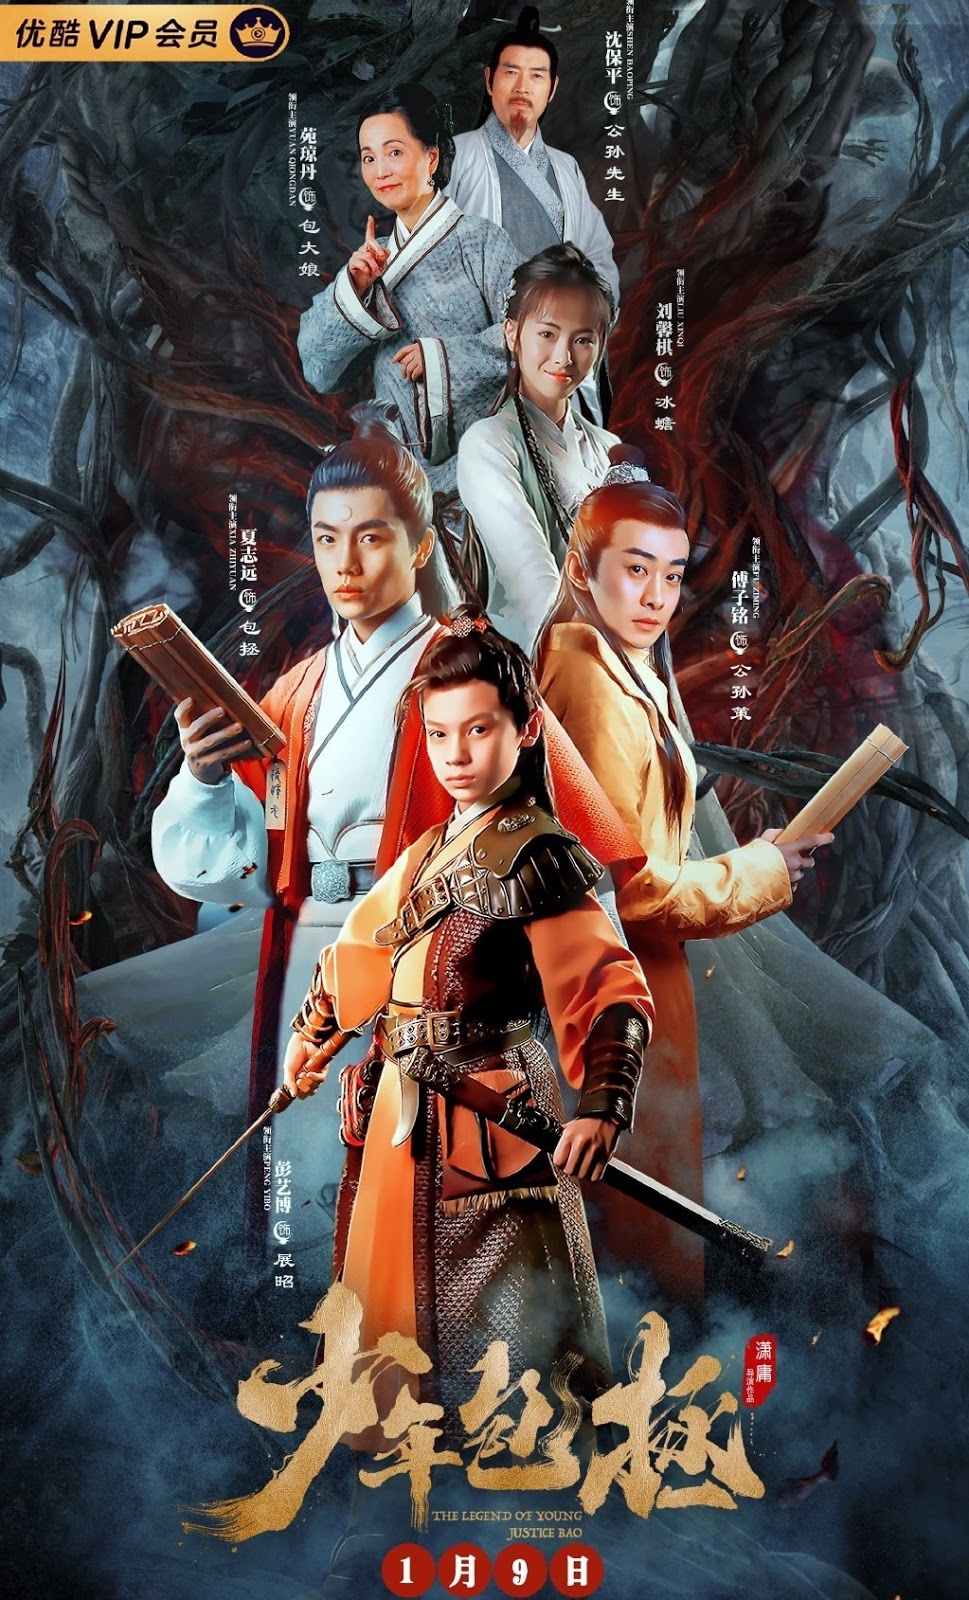 Thiếu Niên Bao Chửng - The Legend of Young Justice Bao